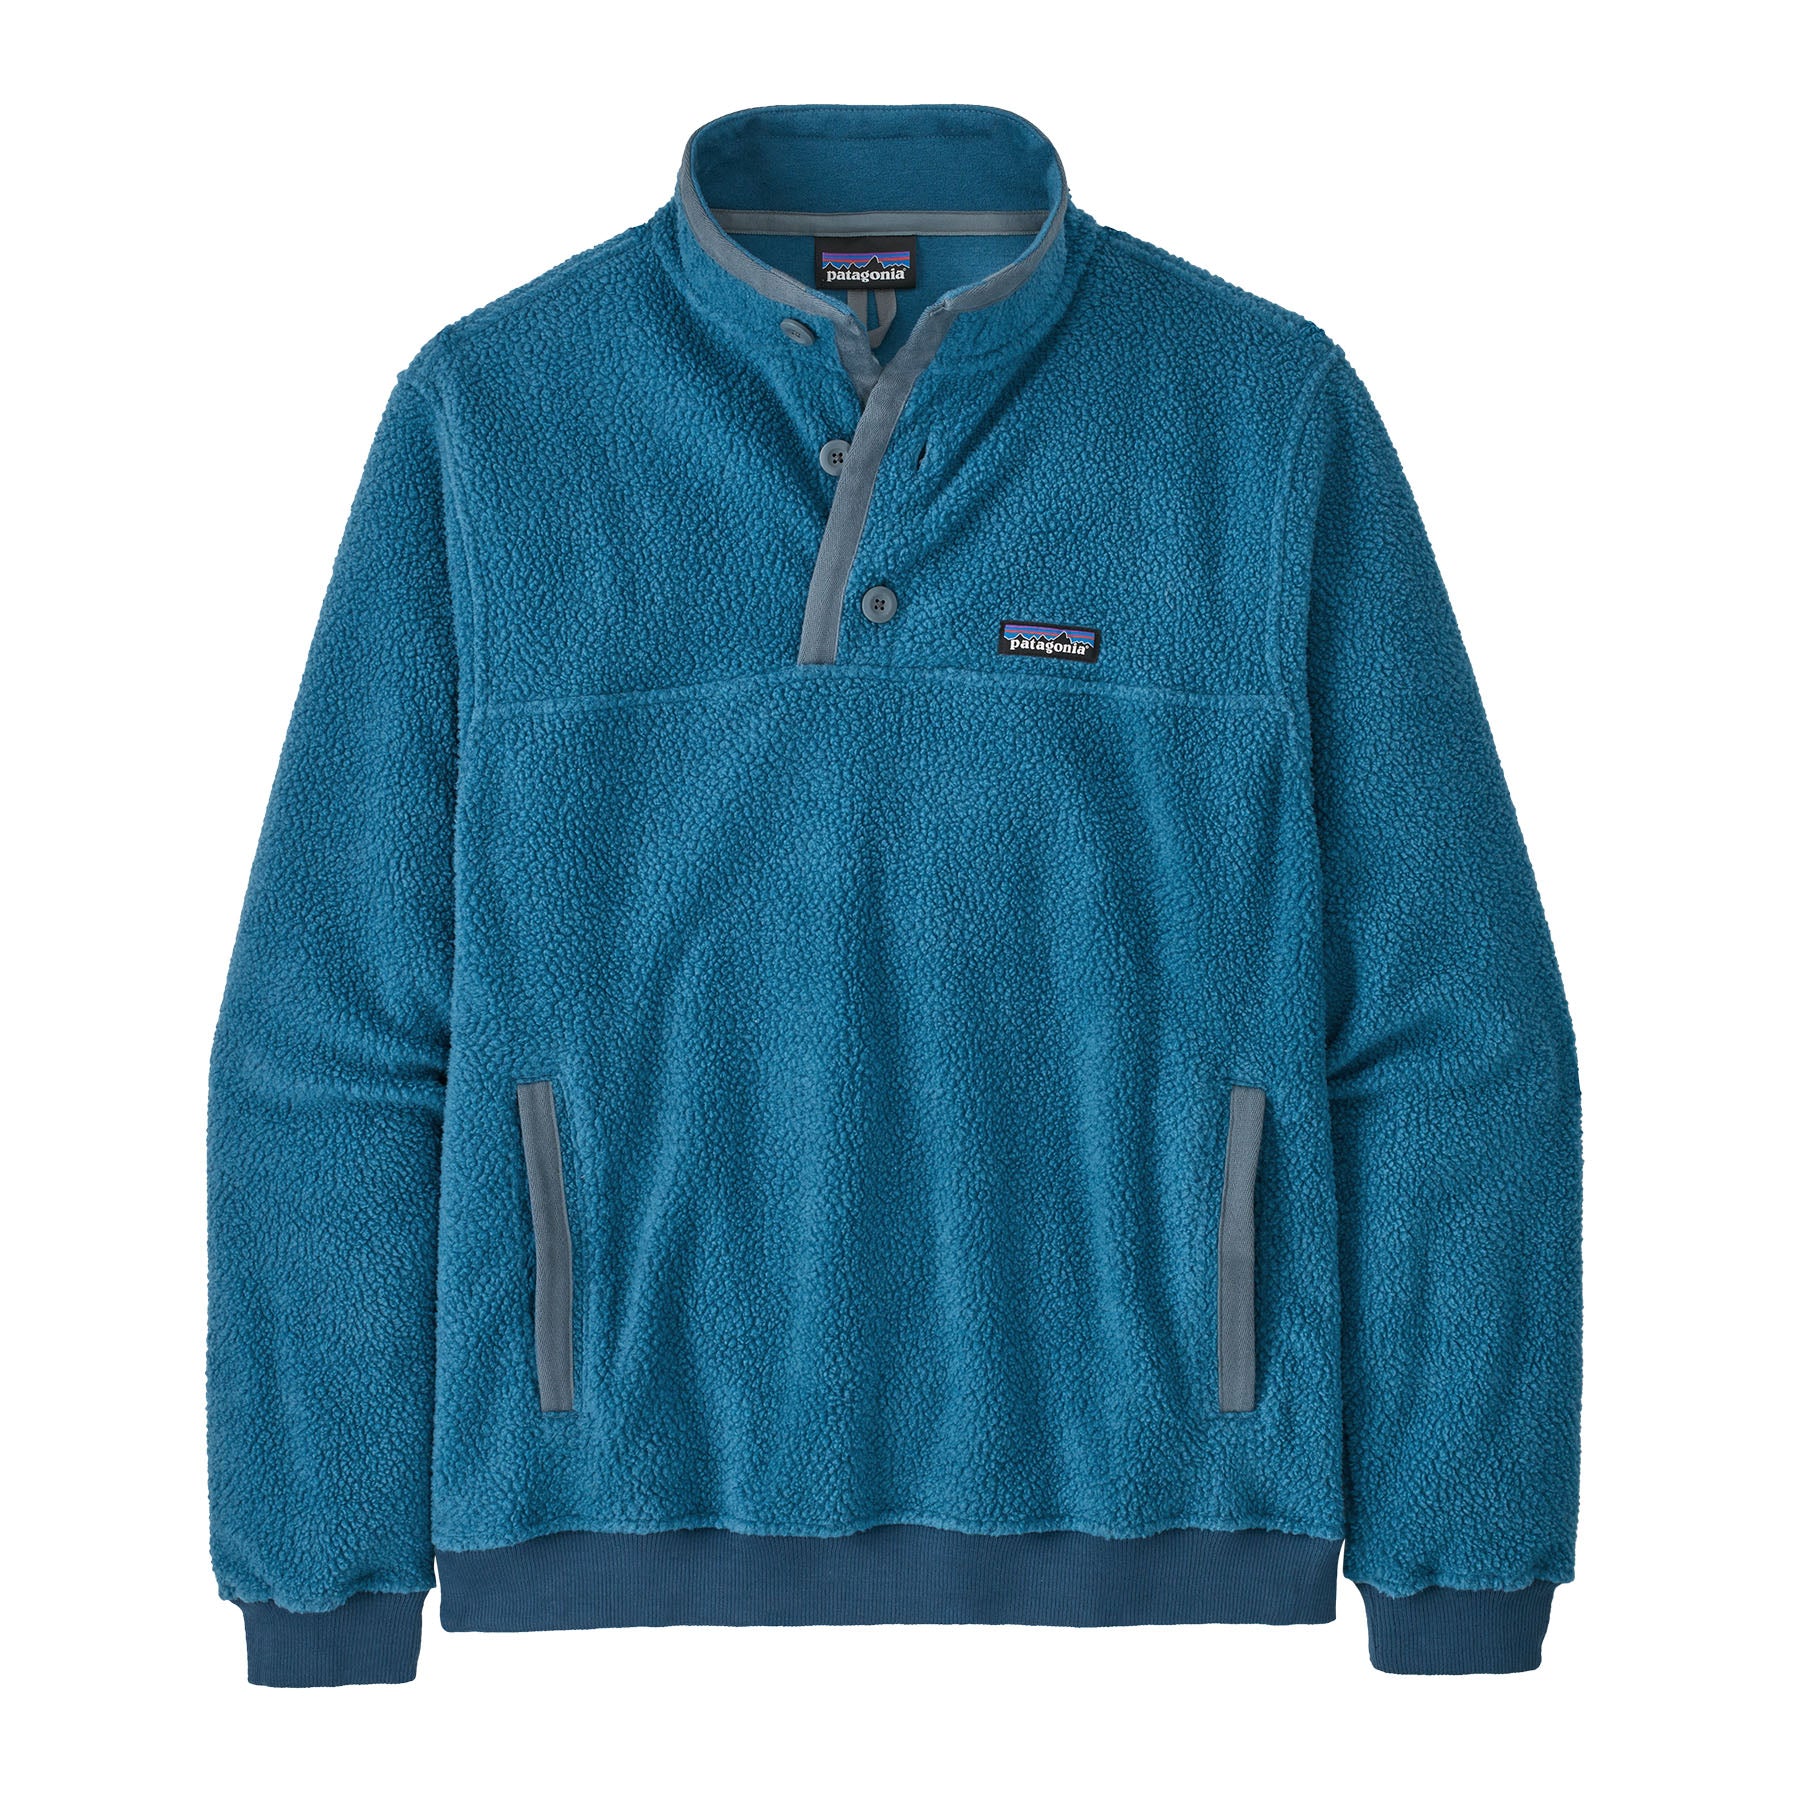 Patagonia Men's Shearling Fleece Jacket XL / Natural